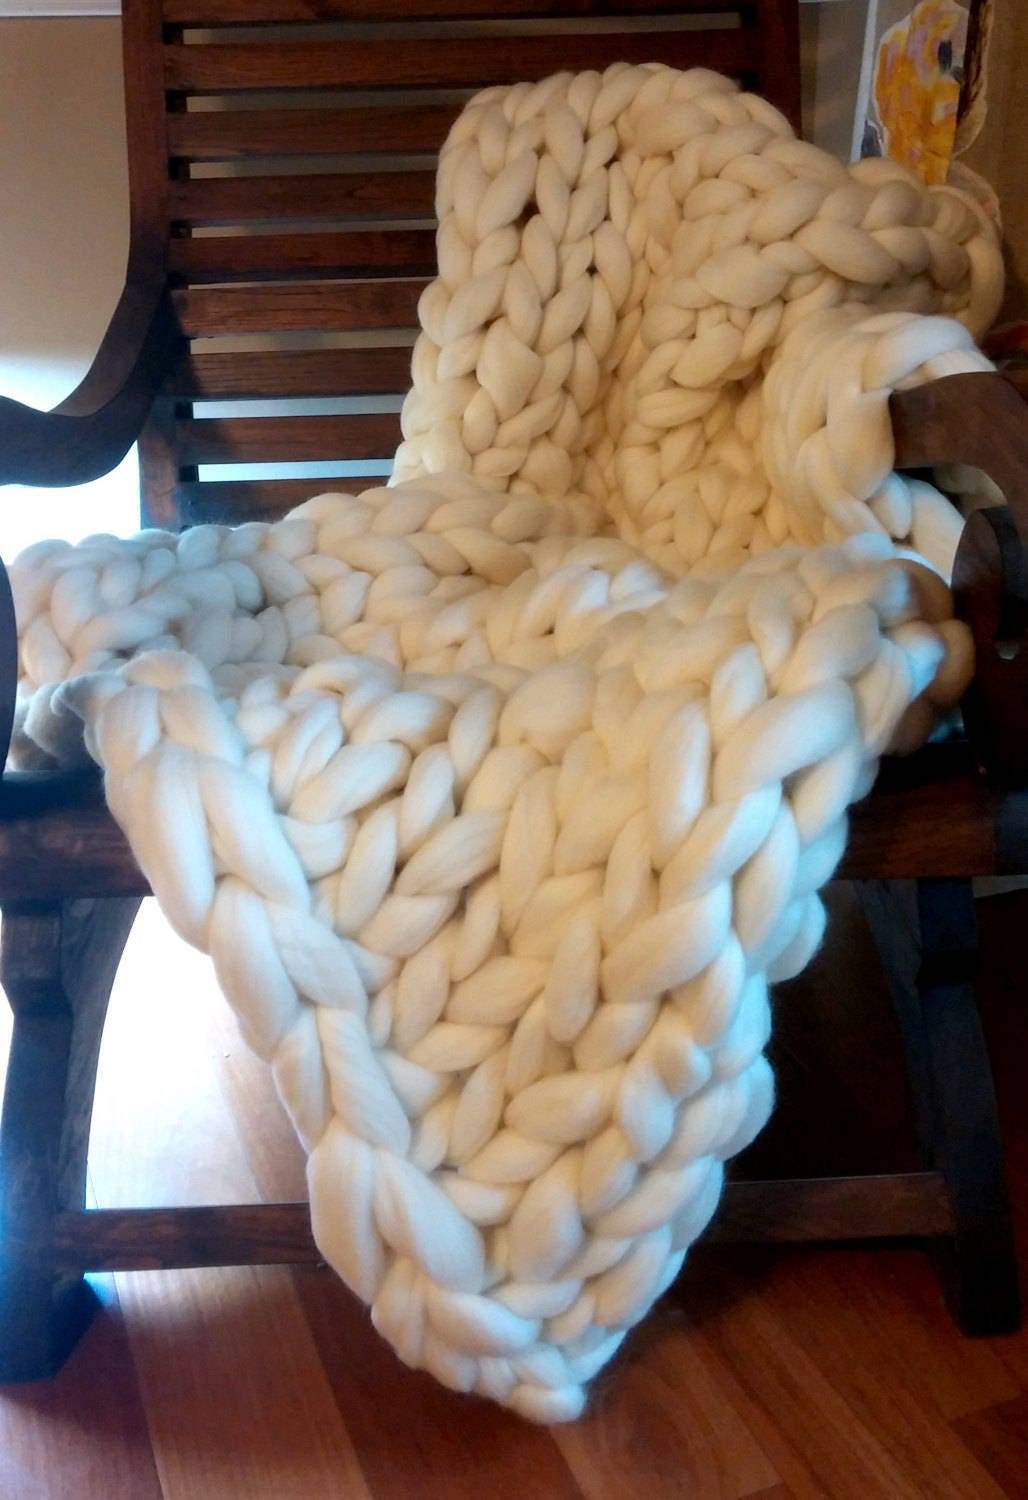 Chunky Knit Blanket Merino Wool 40" x 50" Throw Blanket Giant Knit, Extra Chunky Bulky Knit Blanket, Arm Knit Blanket, Big Super Knit